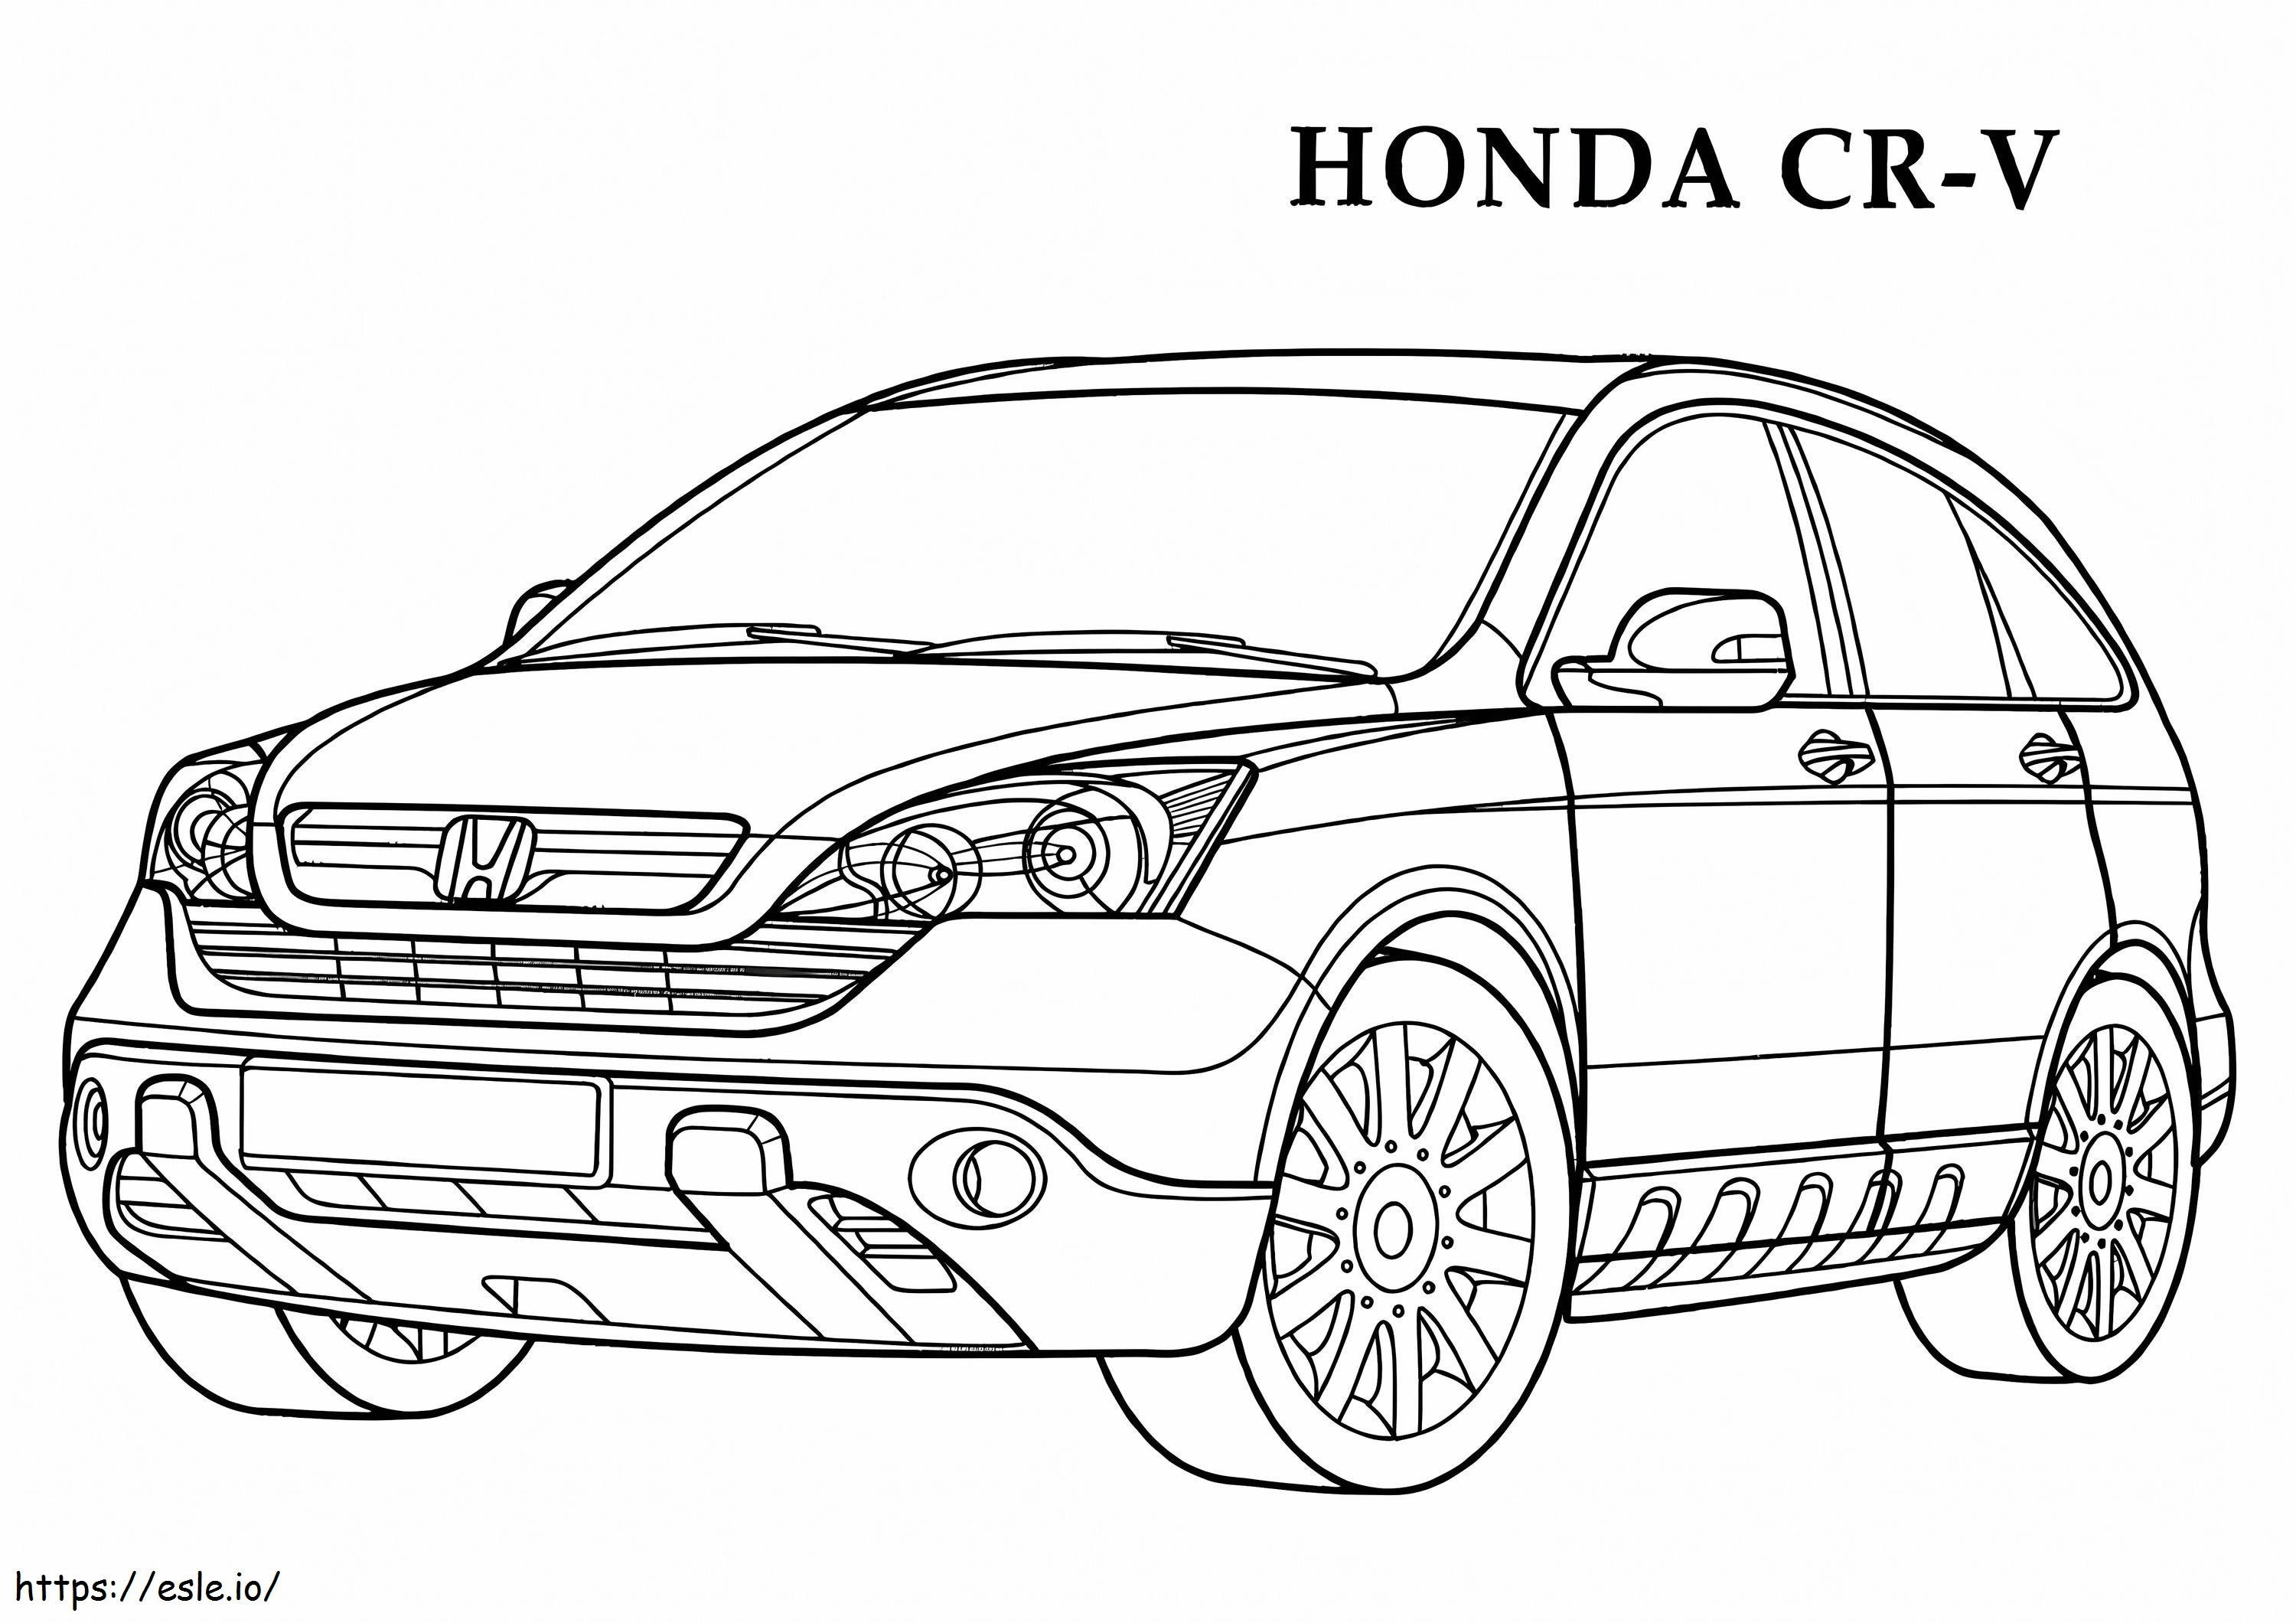 Coloriage Honda CRV2 à imprimer dessin